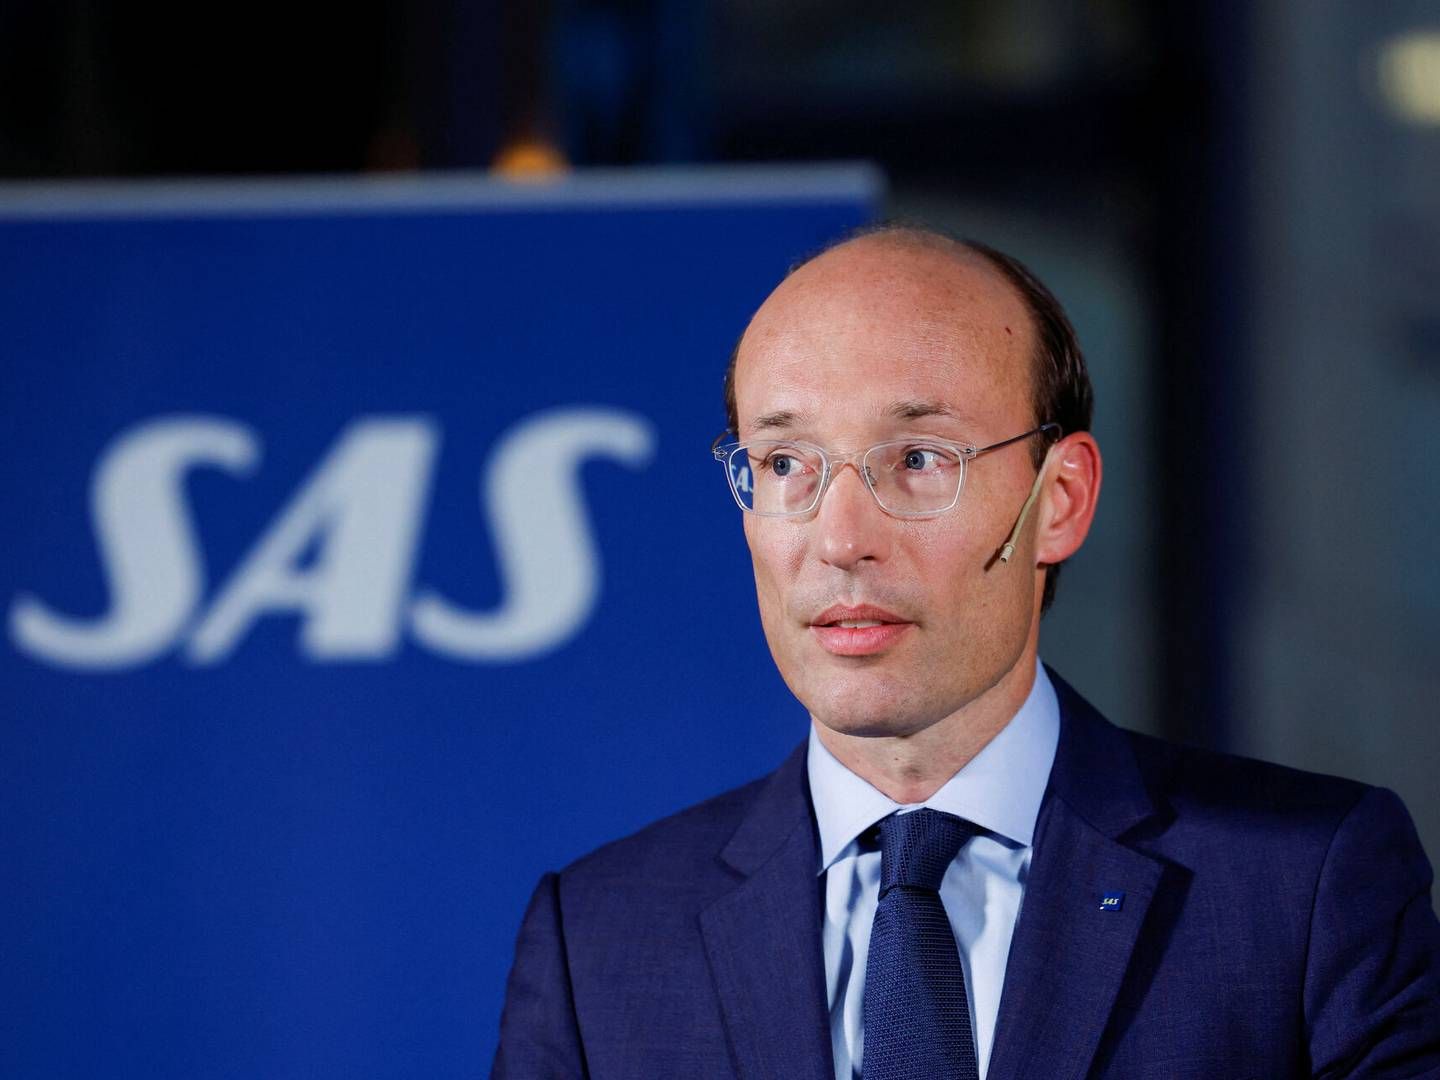 SAS-topchef Anko van der Werff. | Foto: TT News Agency/Reuters/Ritzau Scanpix